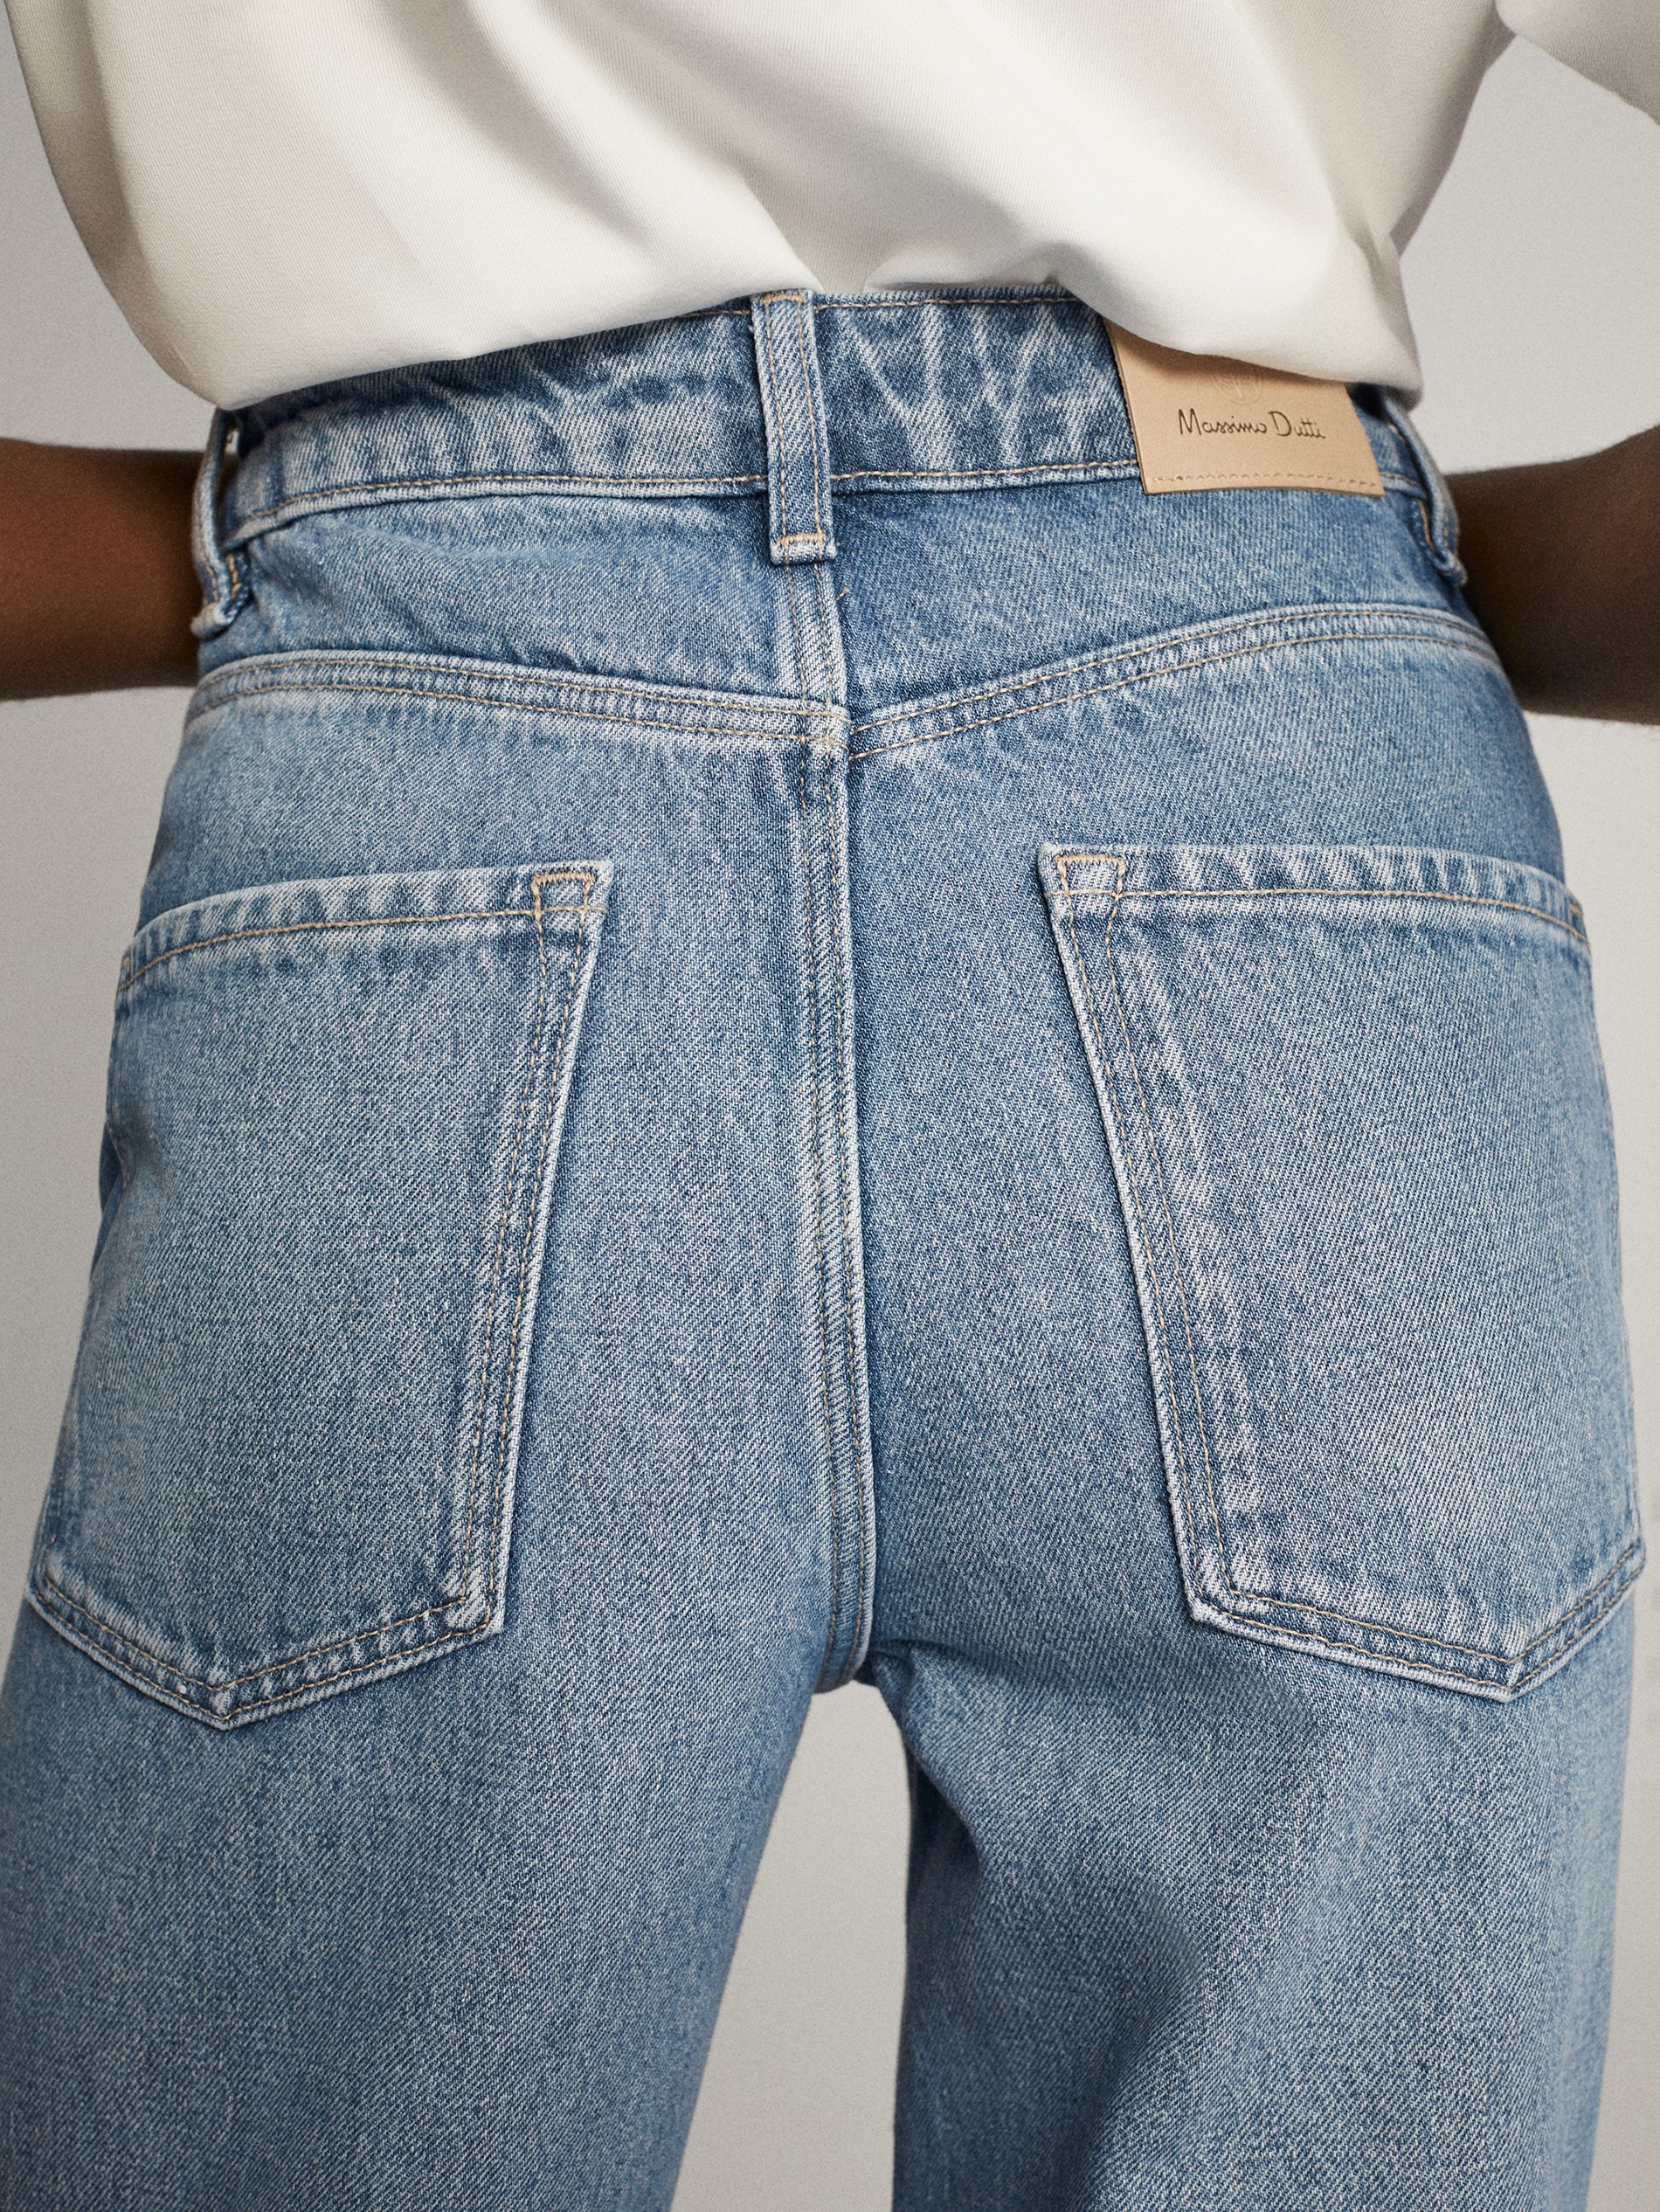 massimo dutti high waist jeans